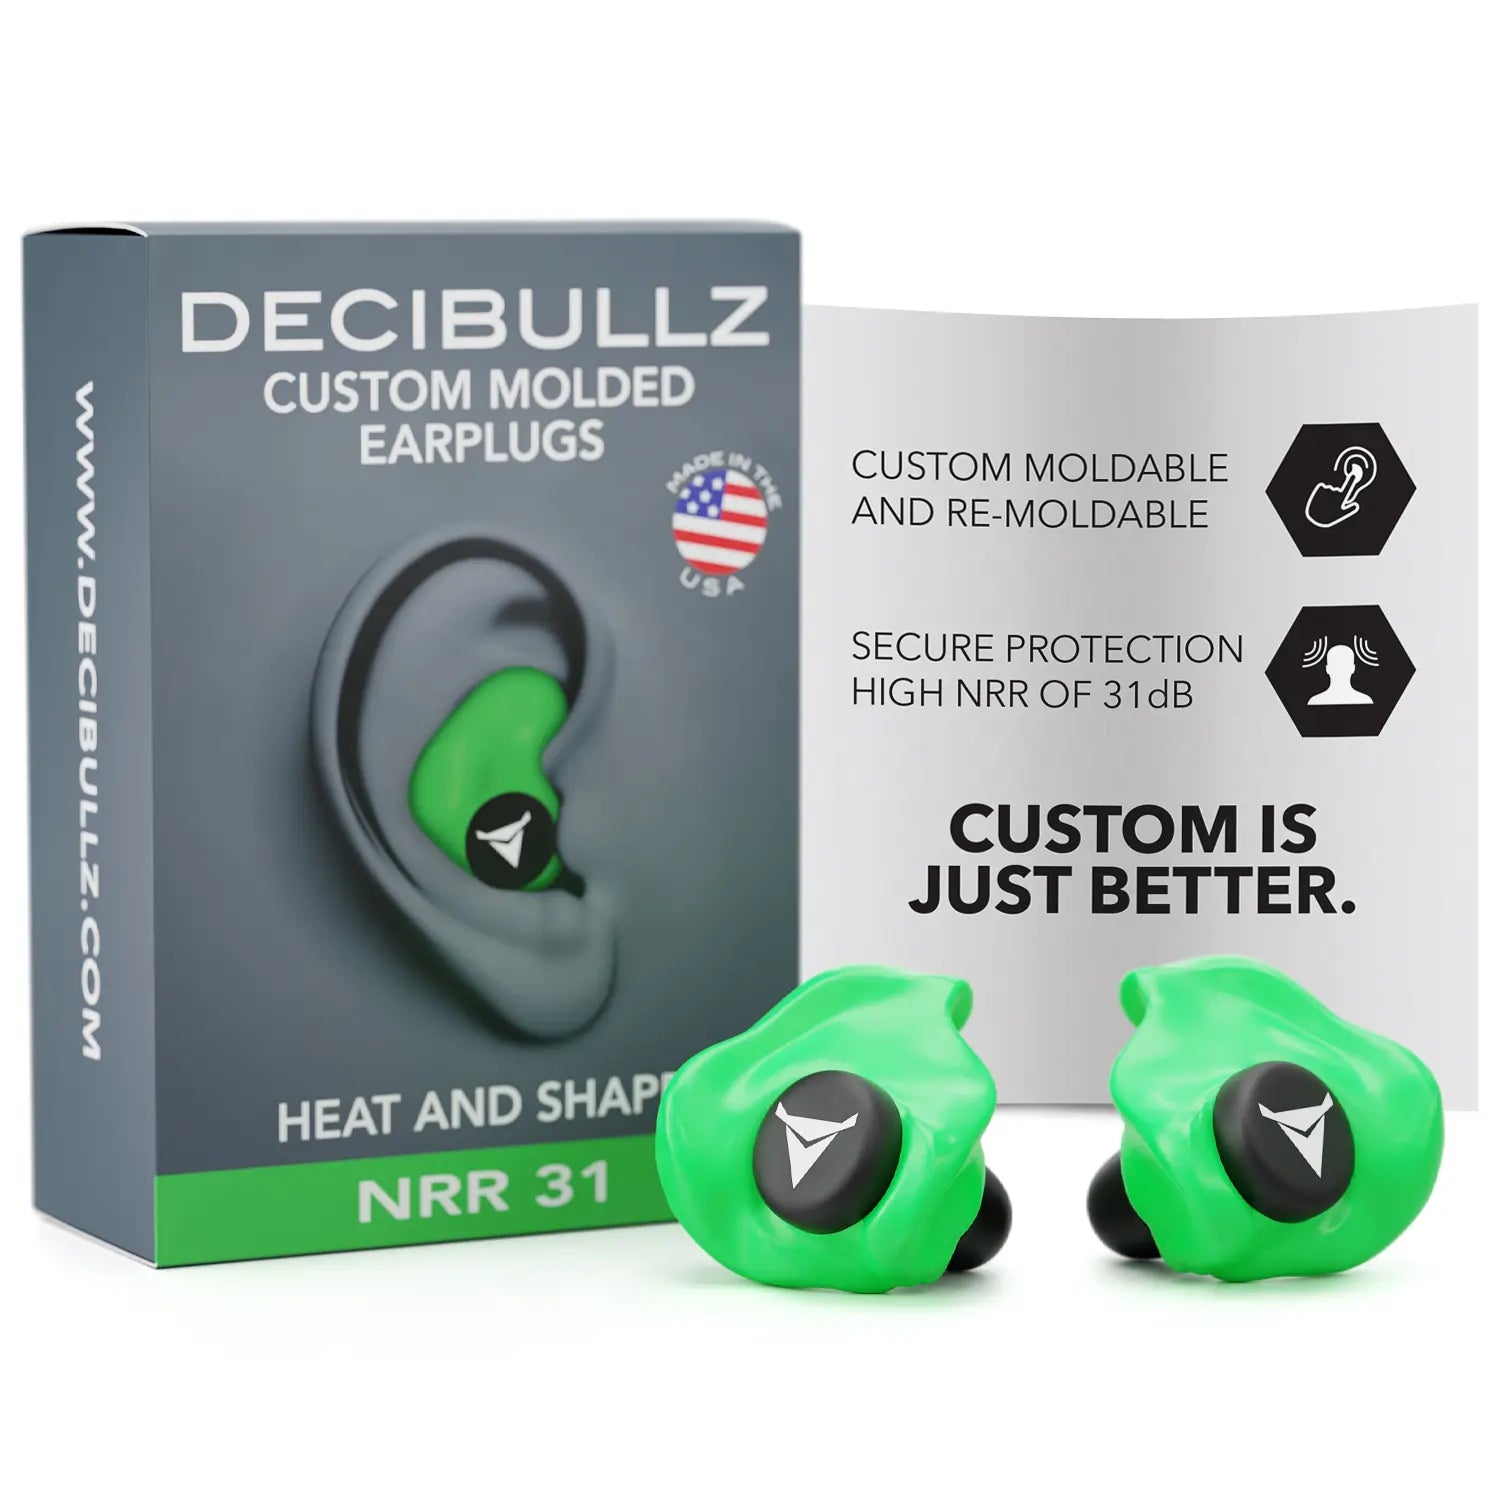 Decibullz Custom Molded Earplugs & Earphones | Isolation, Fit, Comfort